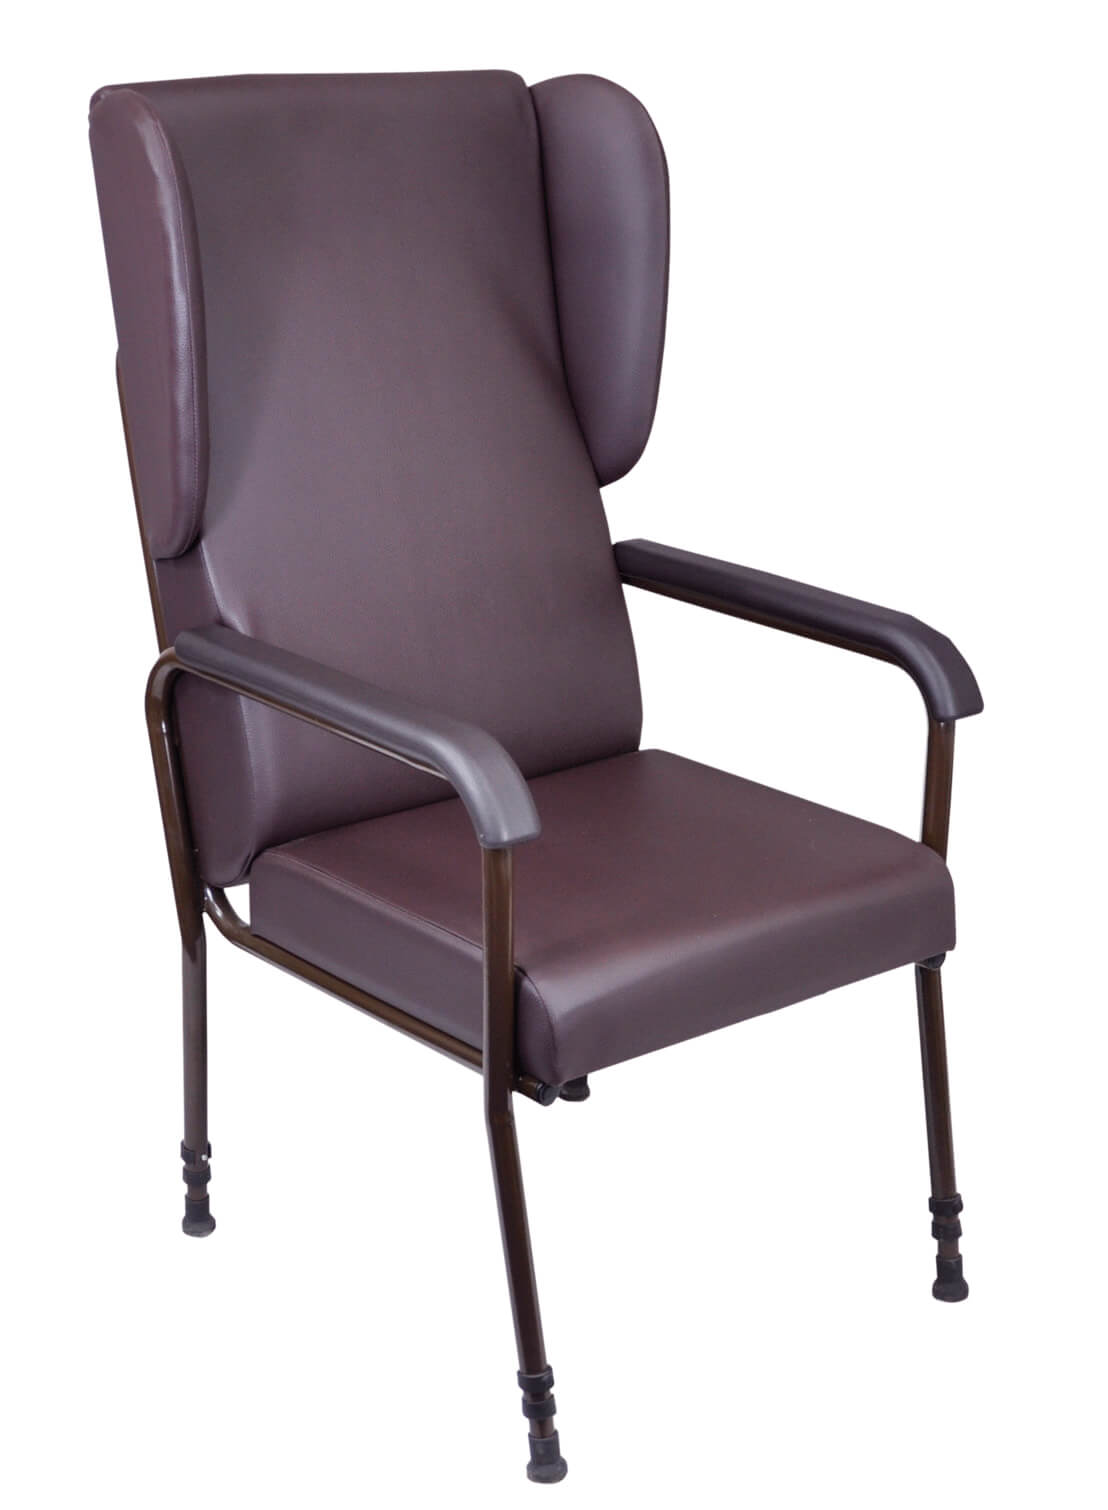 Brown Adjustable Chair